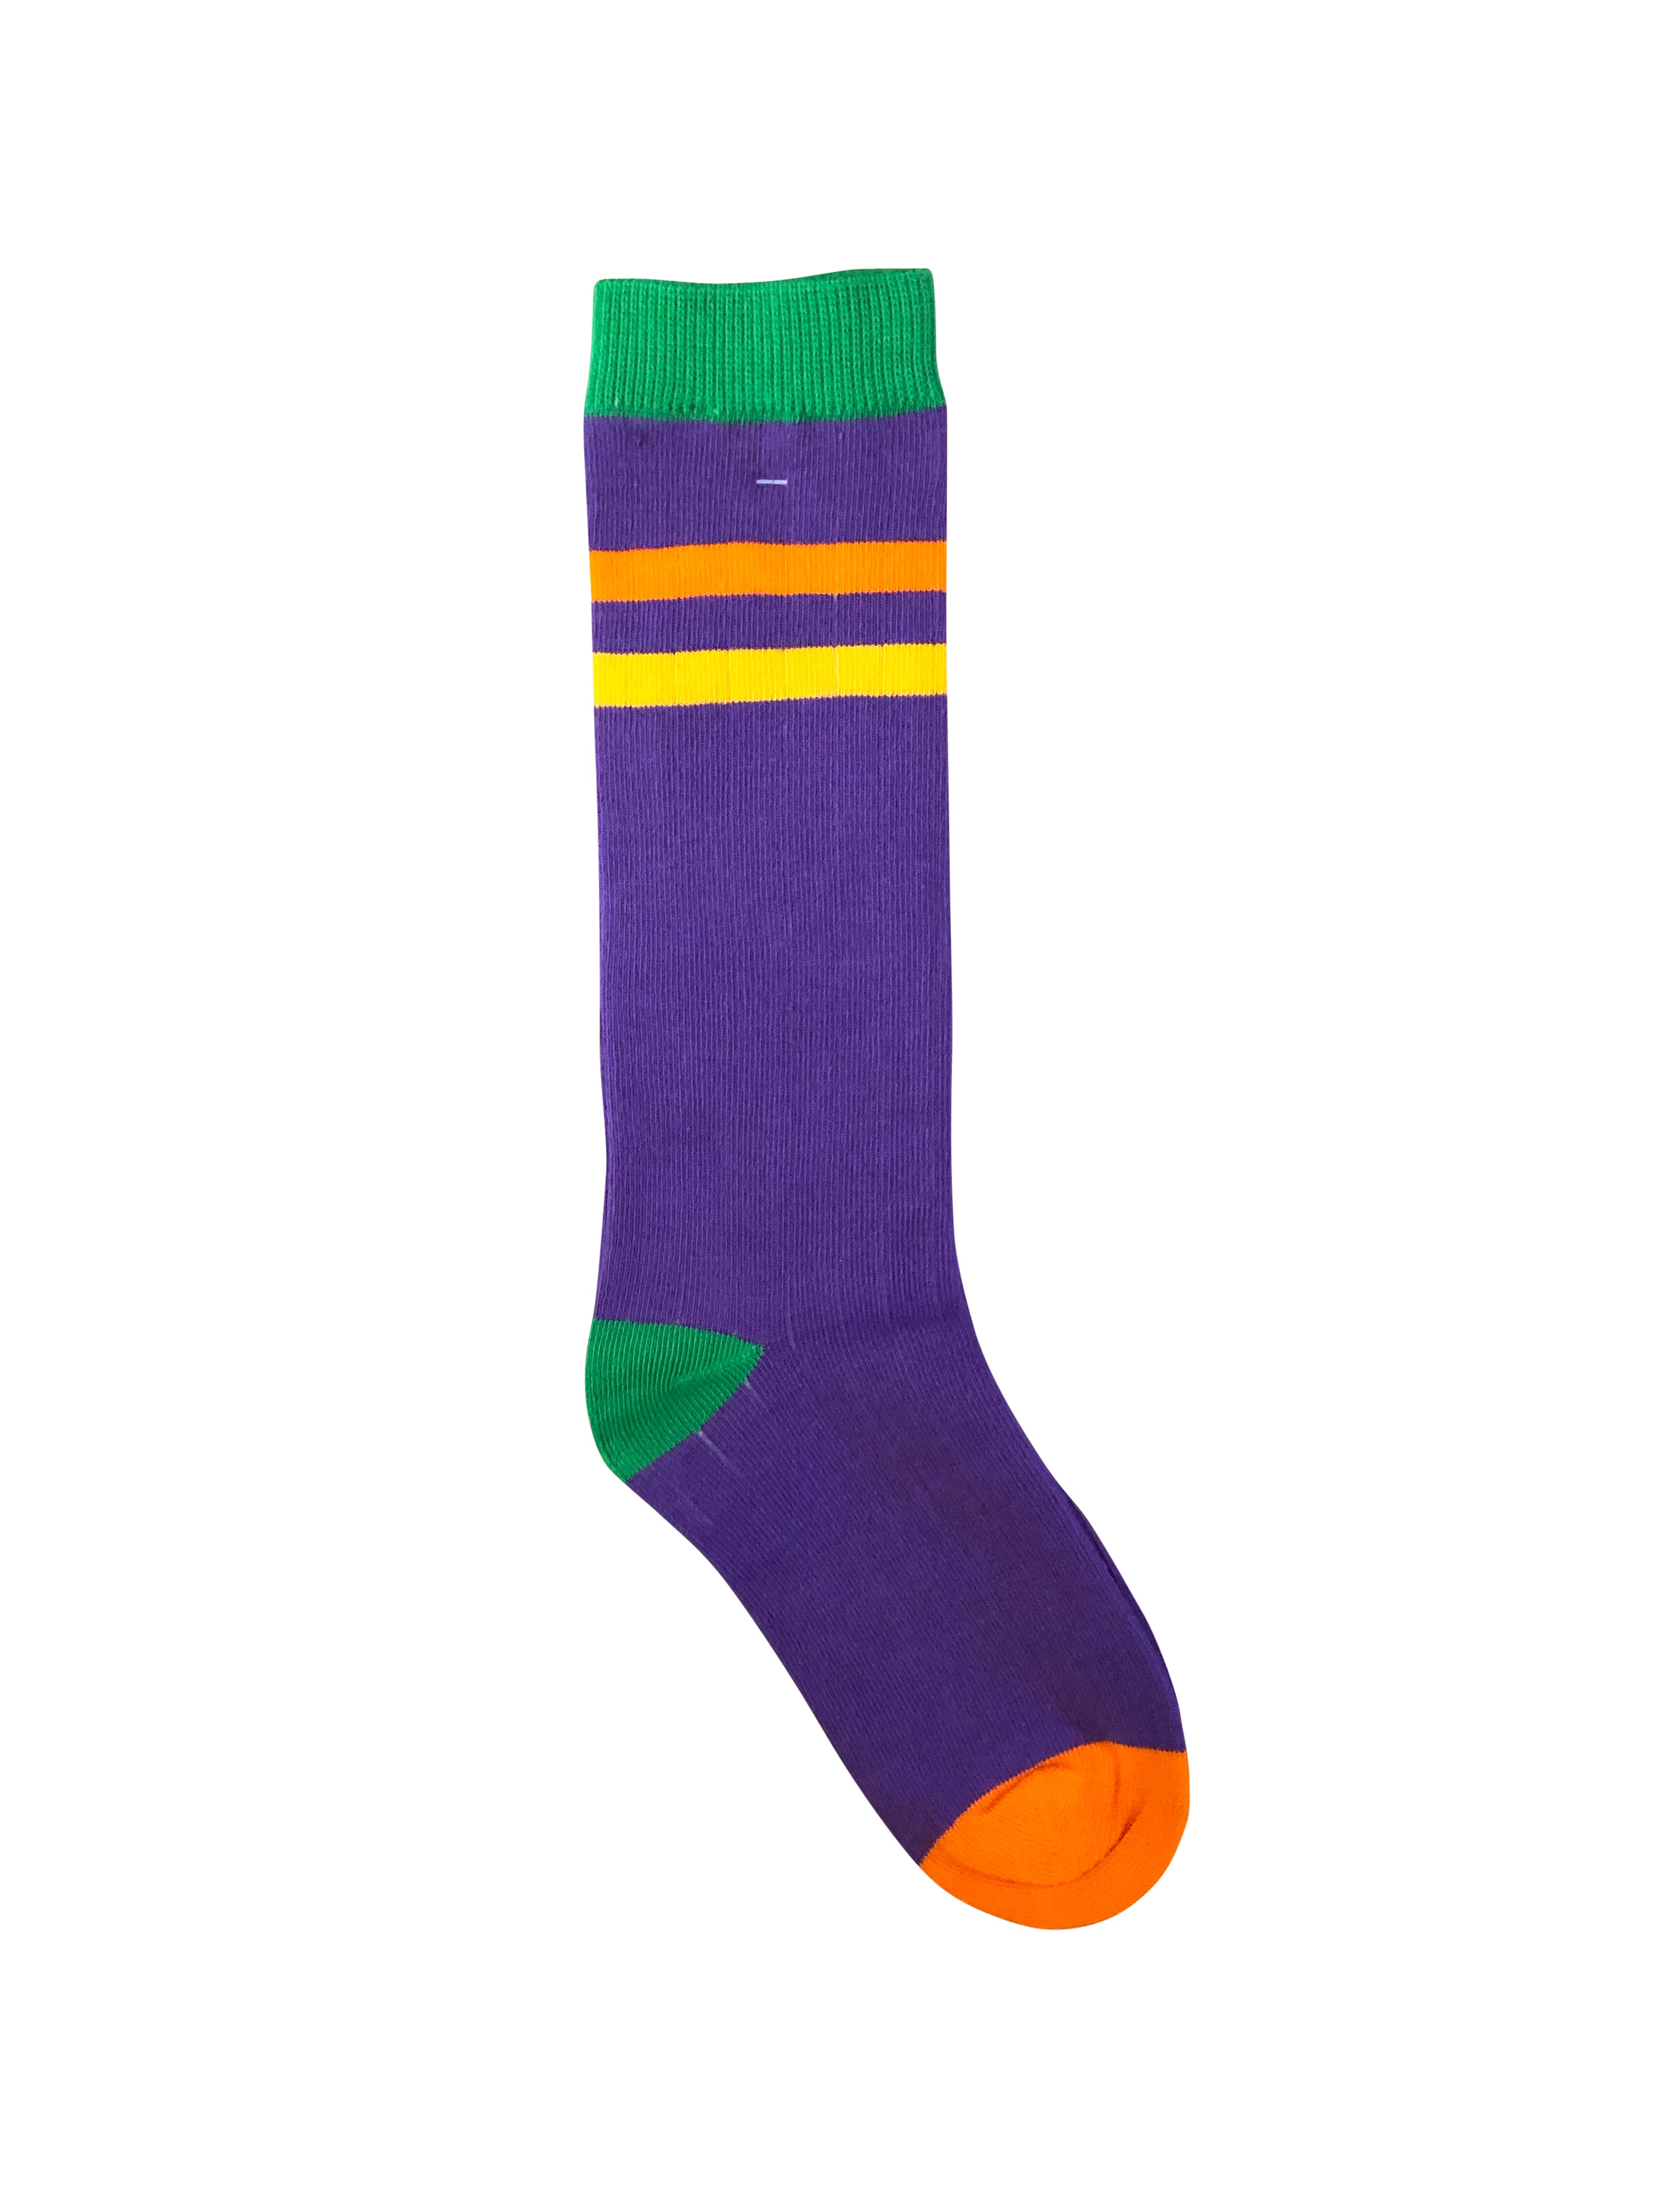 Moromini - Ribbed Tube Socks - Purple